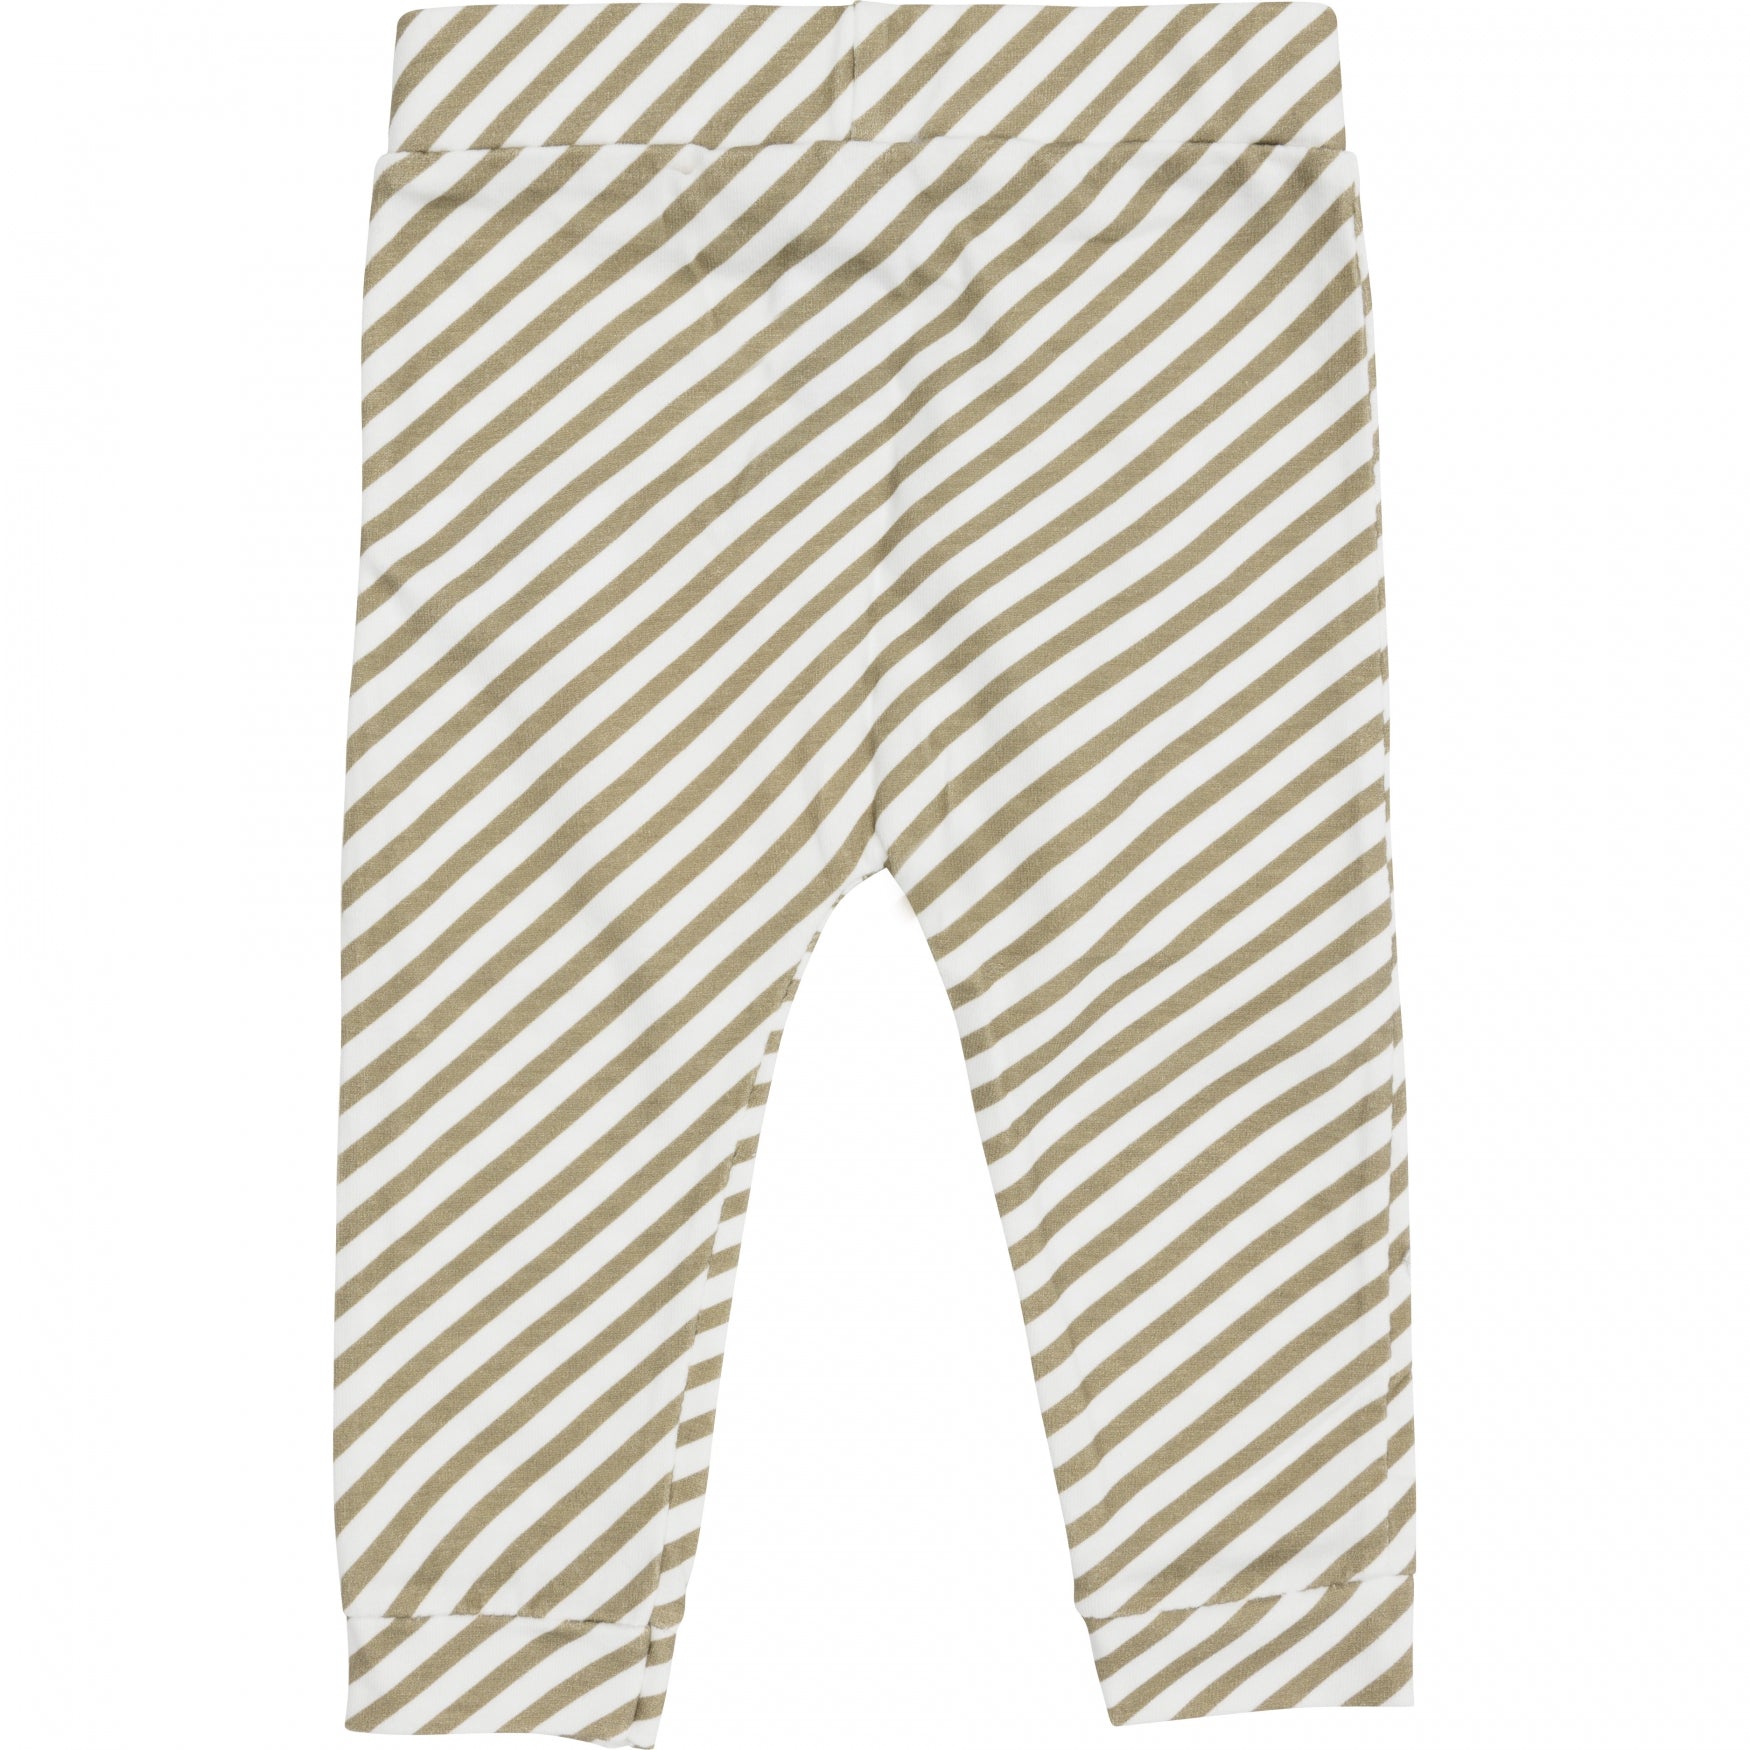 Jongens Trousers van Klein Baby in de kleur Stripe Off White/Twill in maat 74.